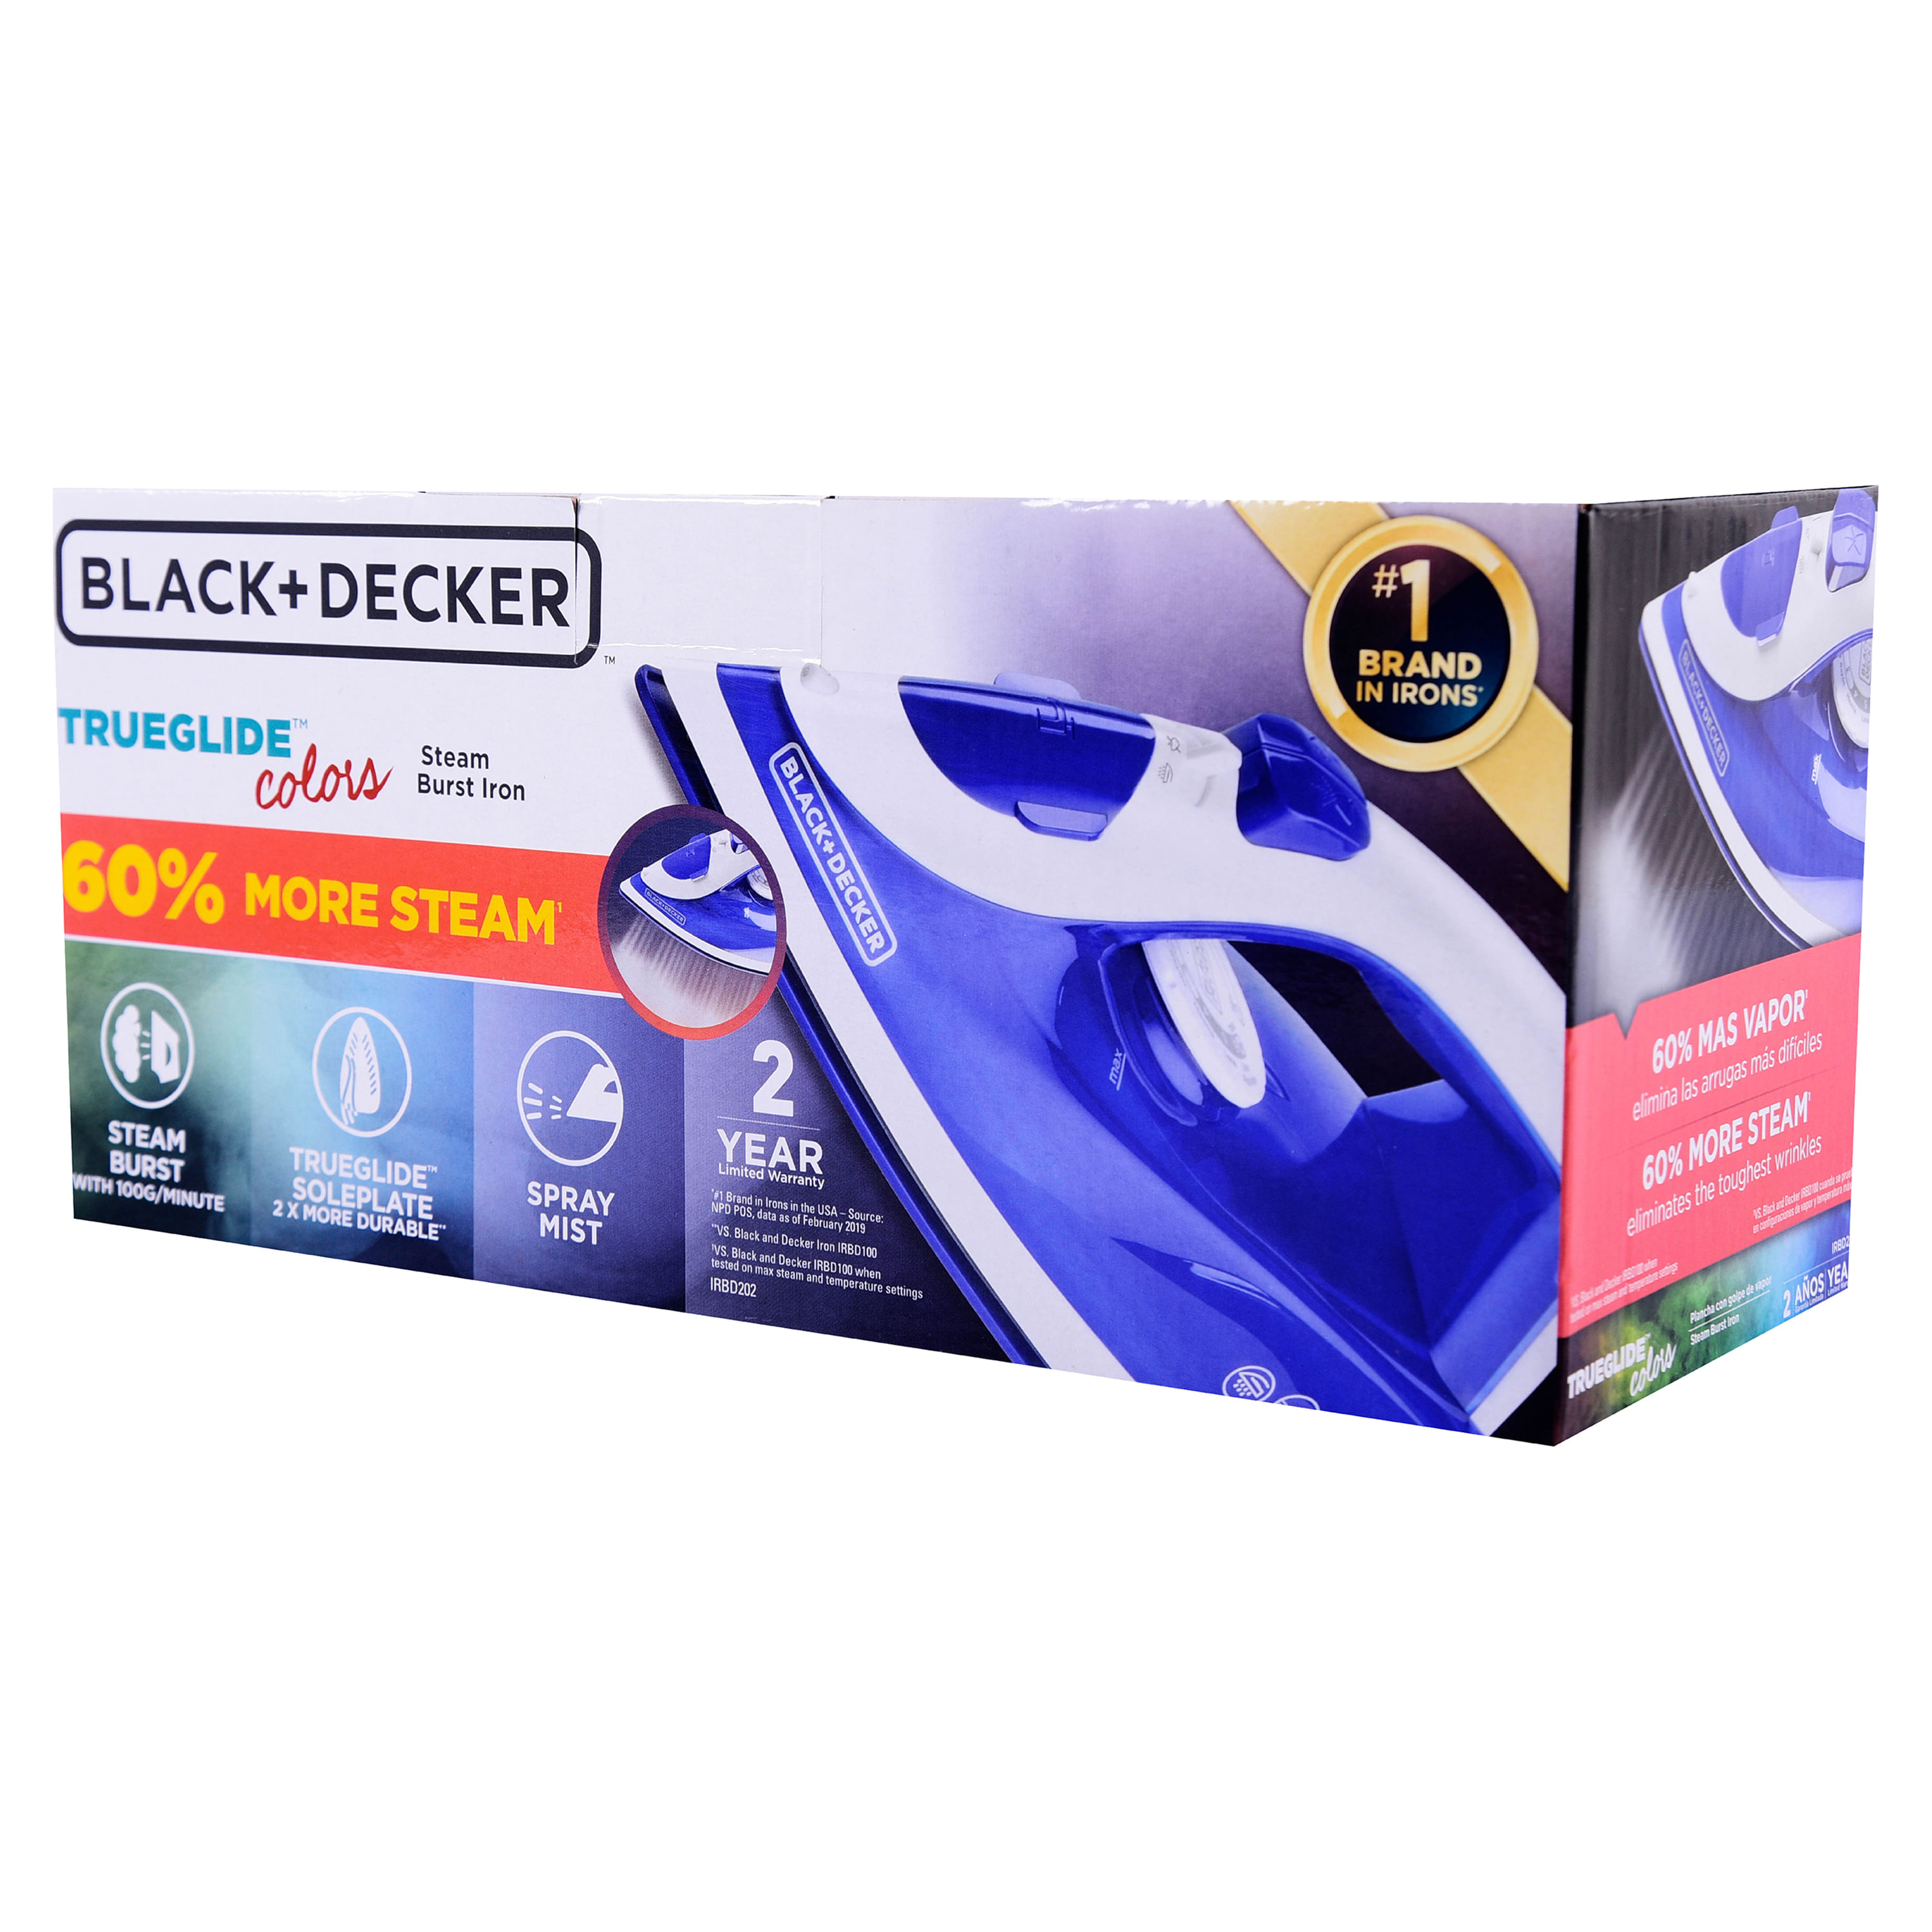 Comprar Plancha Black & Decker A Vapor True Glid